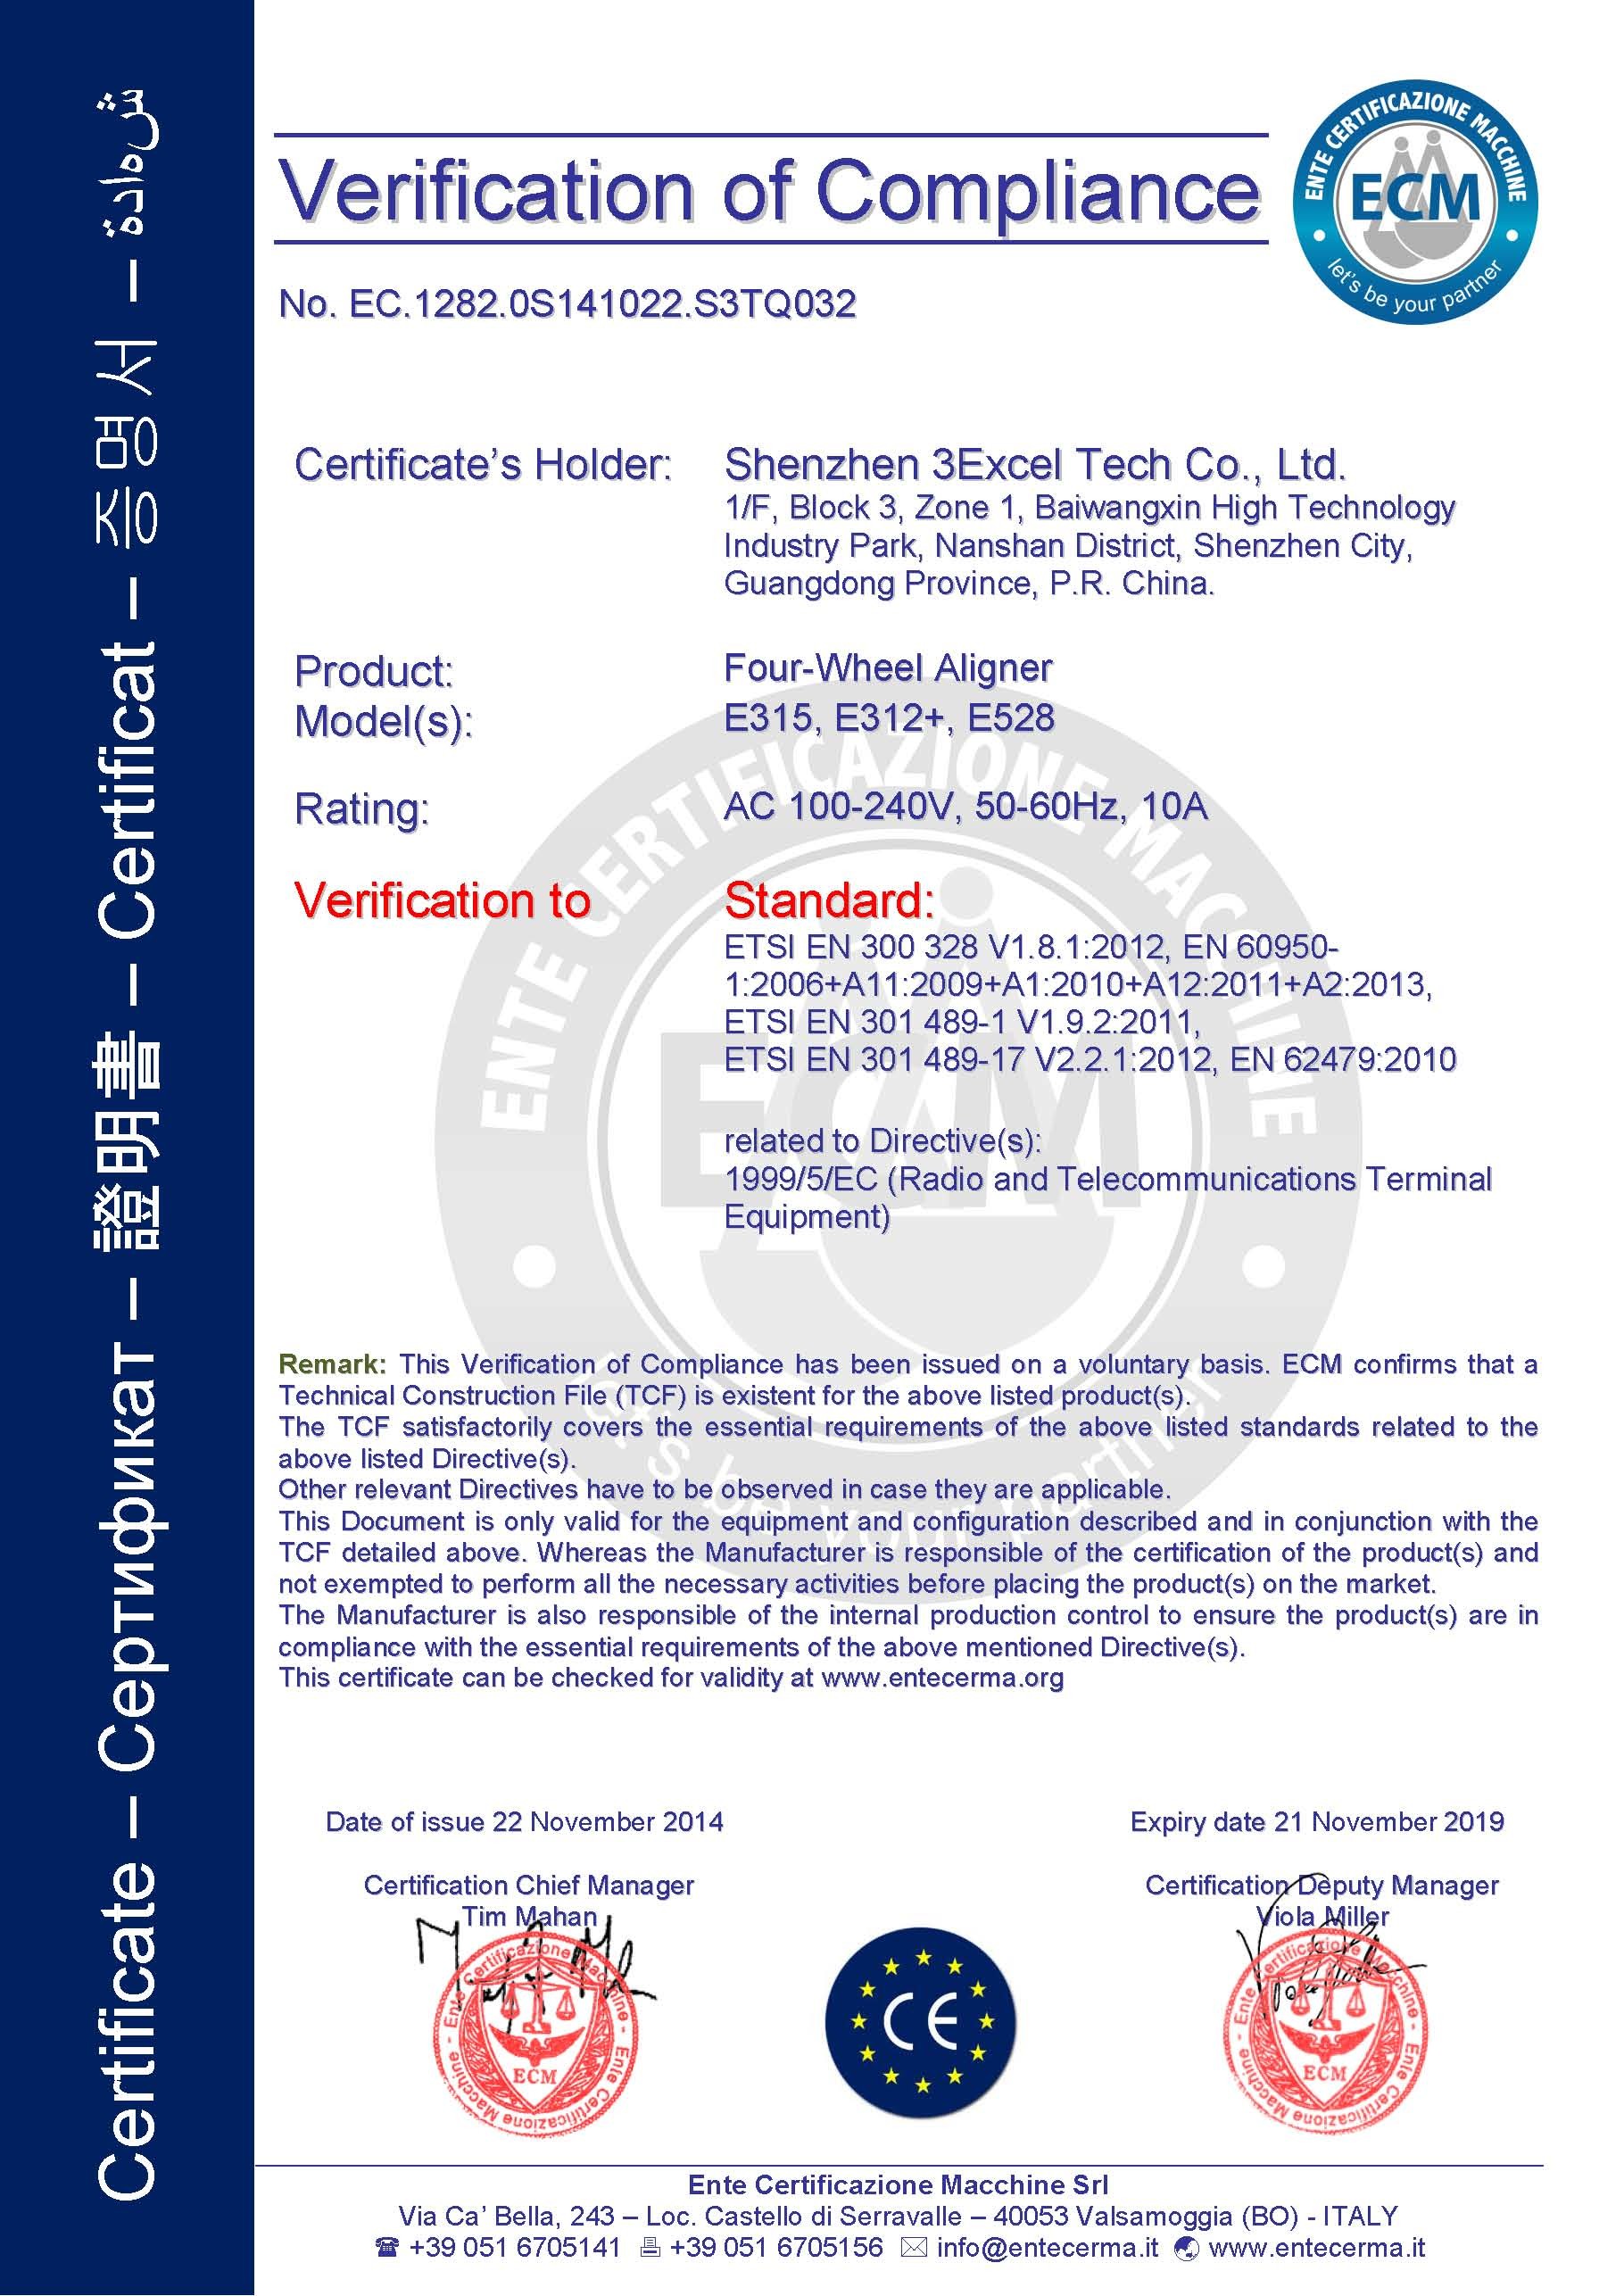 Shenzhen 3Excel Tech Co. Ltd Certifications